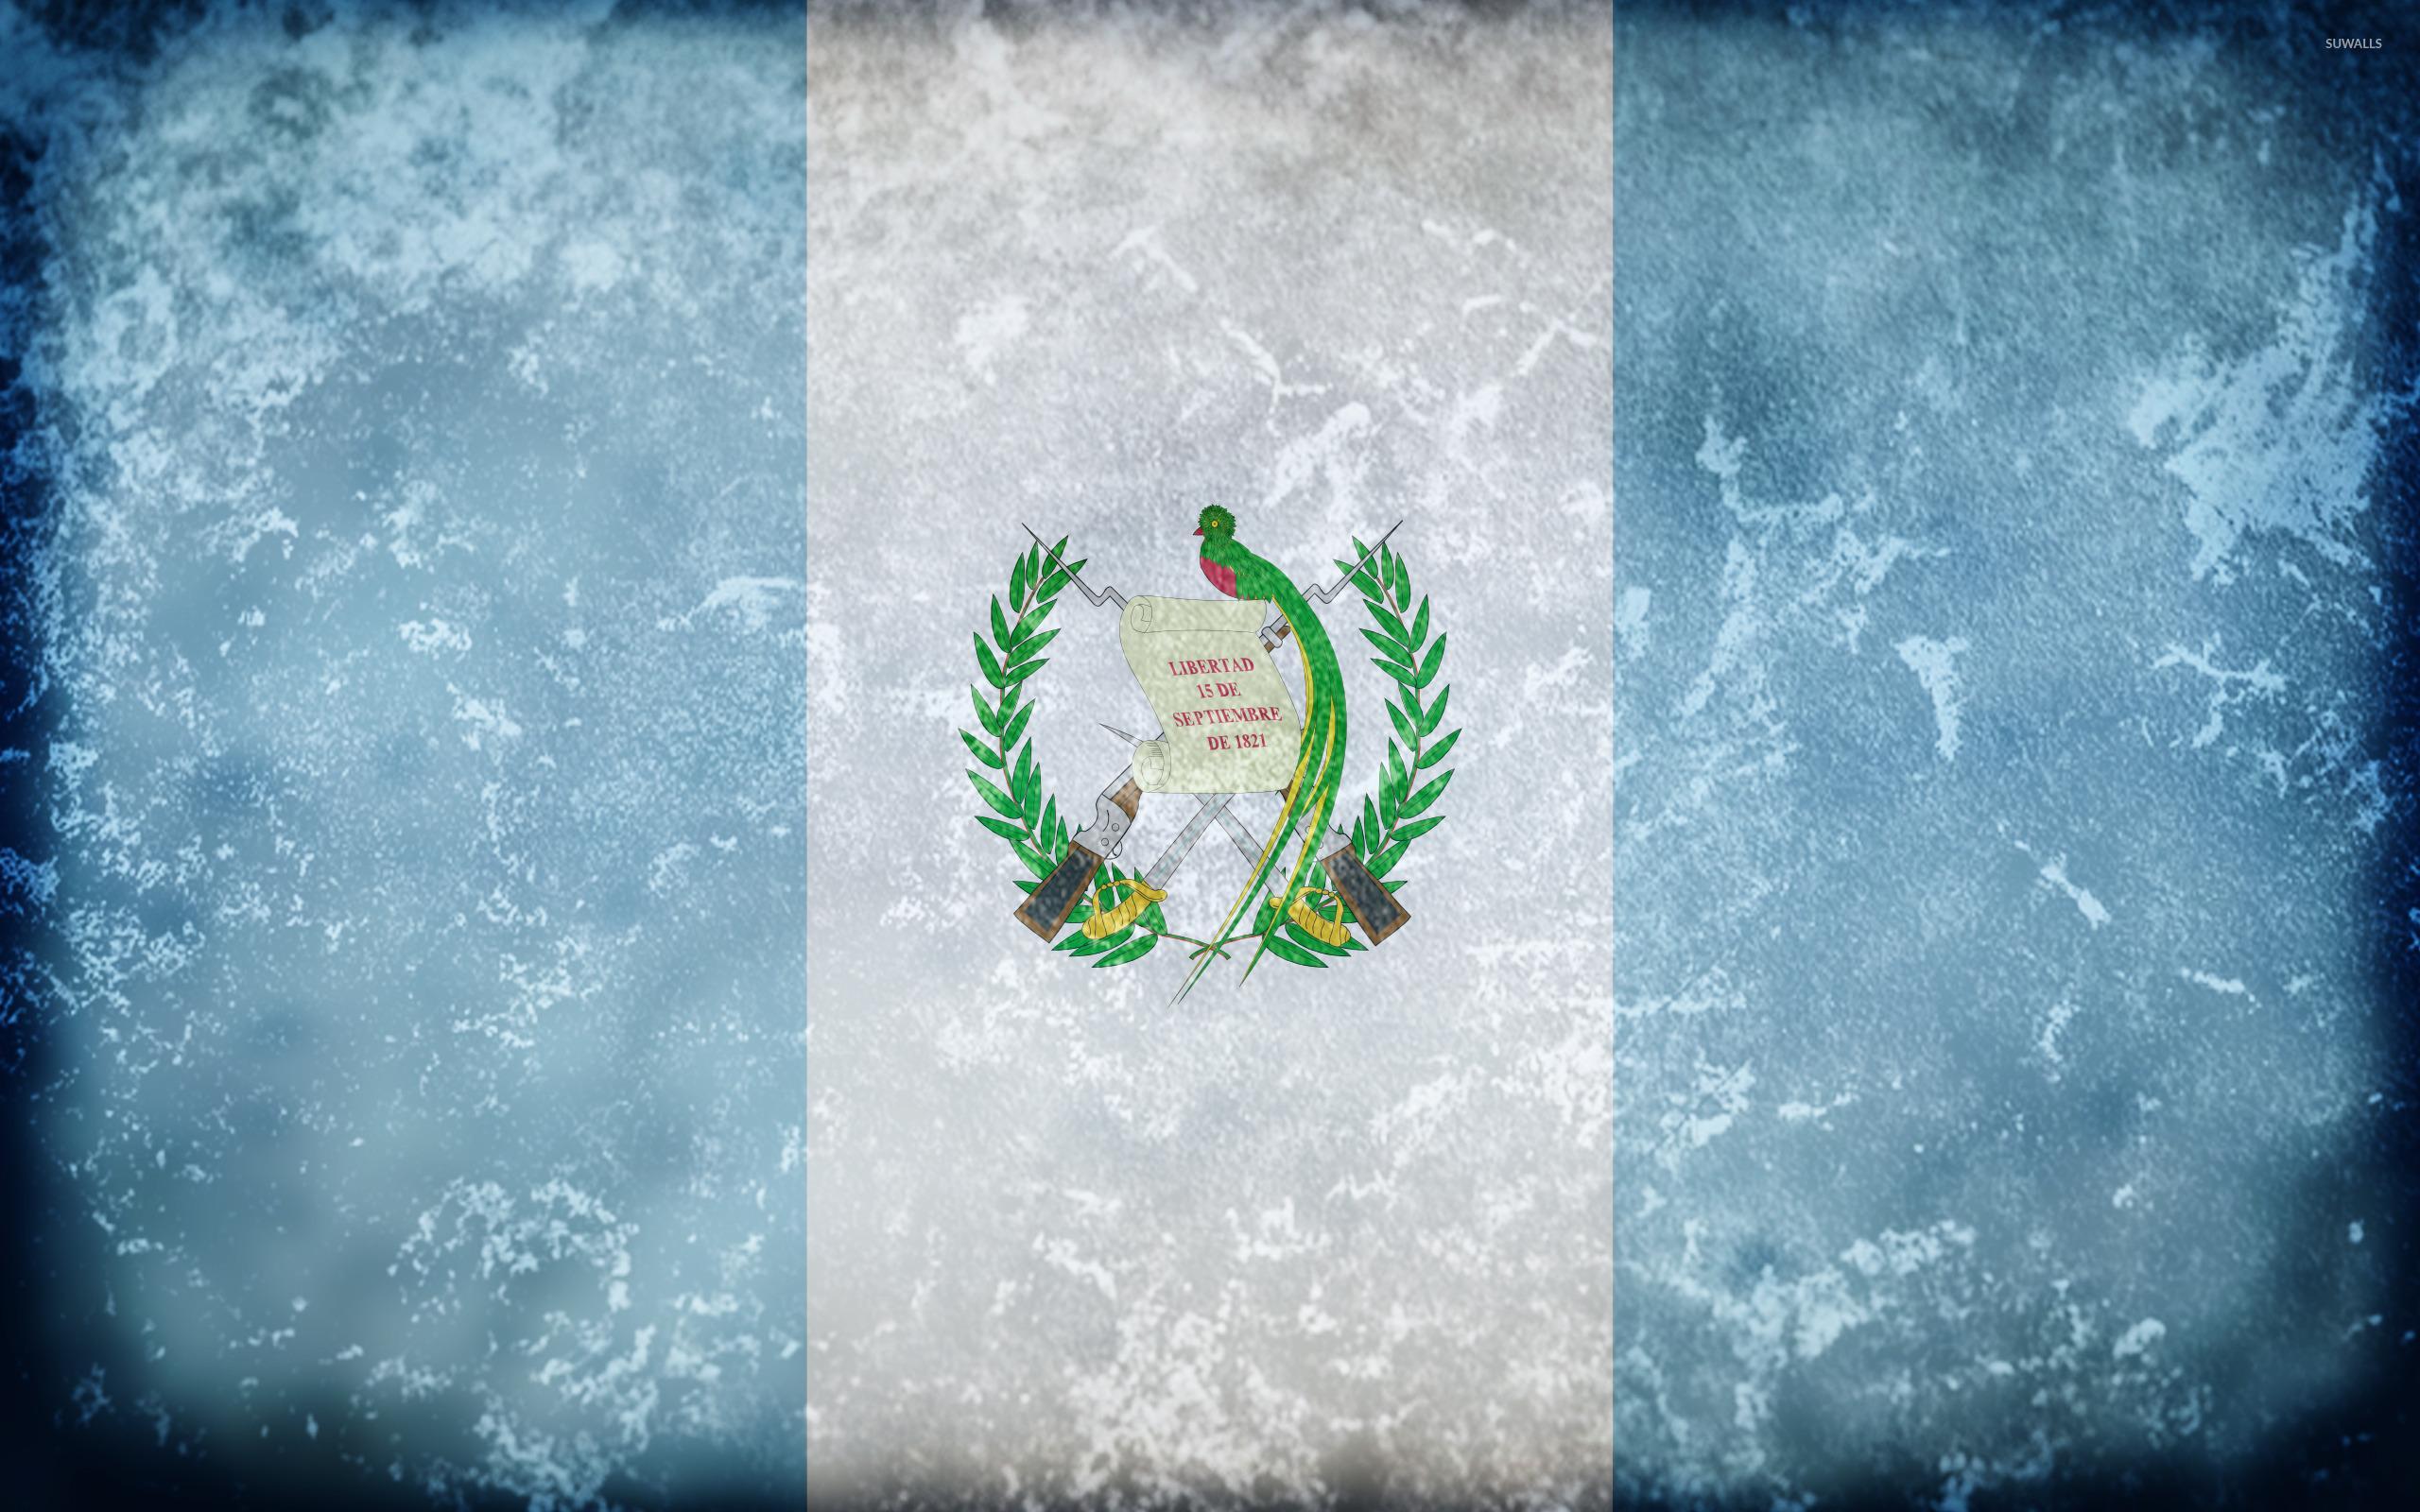 Download wallpapers Guatemala flag mosaic art North American countries  Flag of Guatemala national symbols Guatemalan flag artwork North  America Guatemala for desktop free Pictures for desktop free